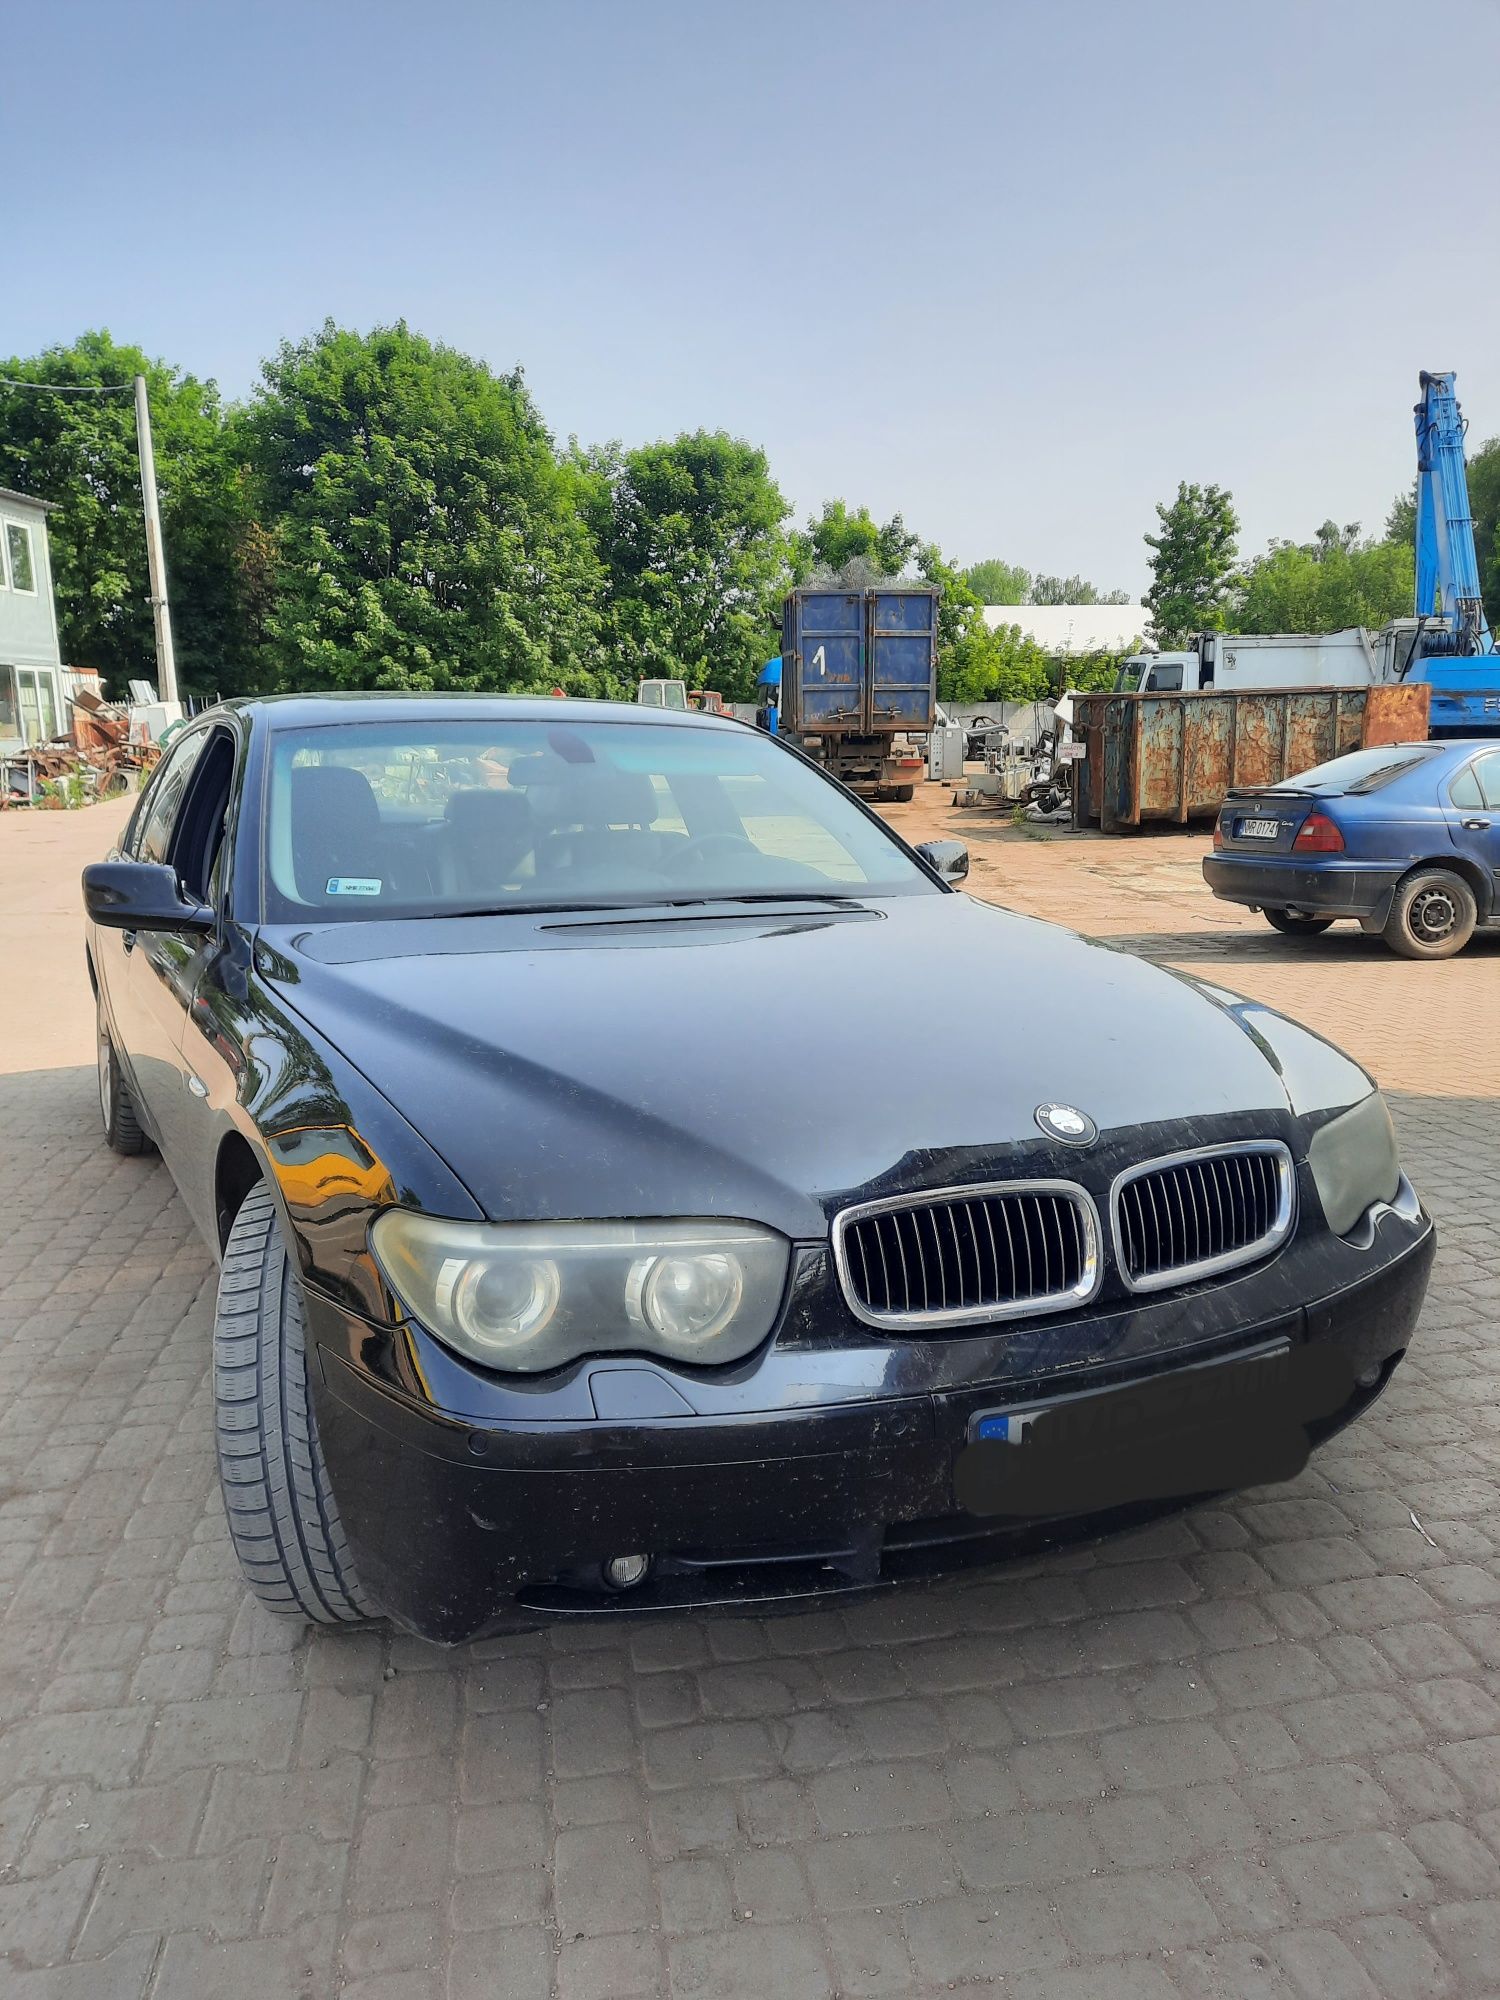 BMW 730D, 2004 rok, 2993,00cm3